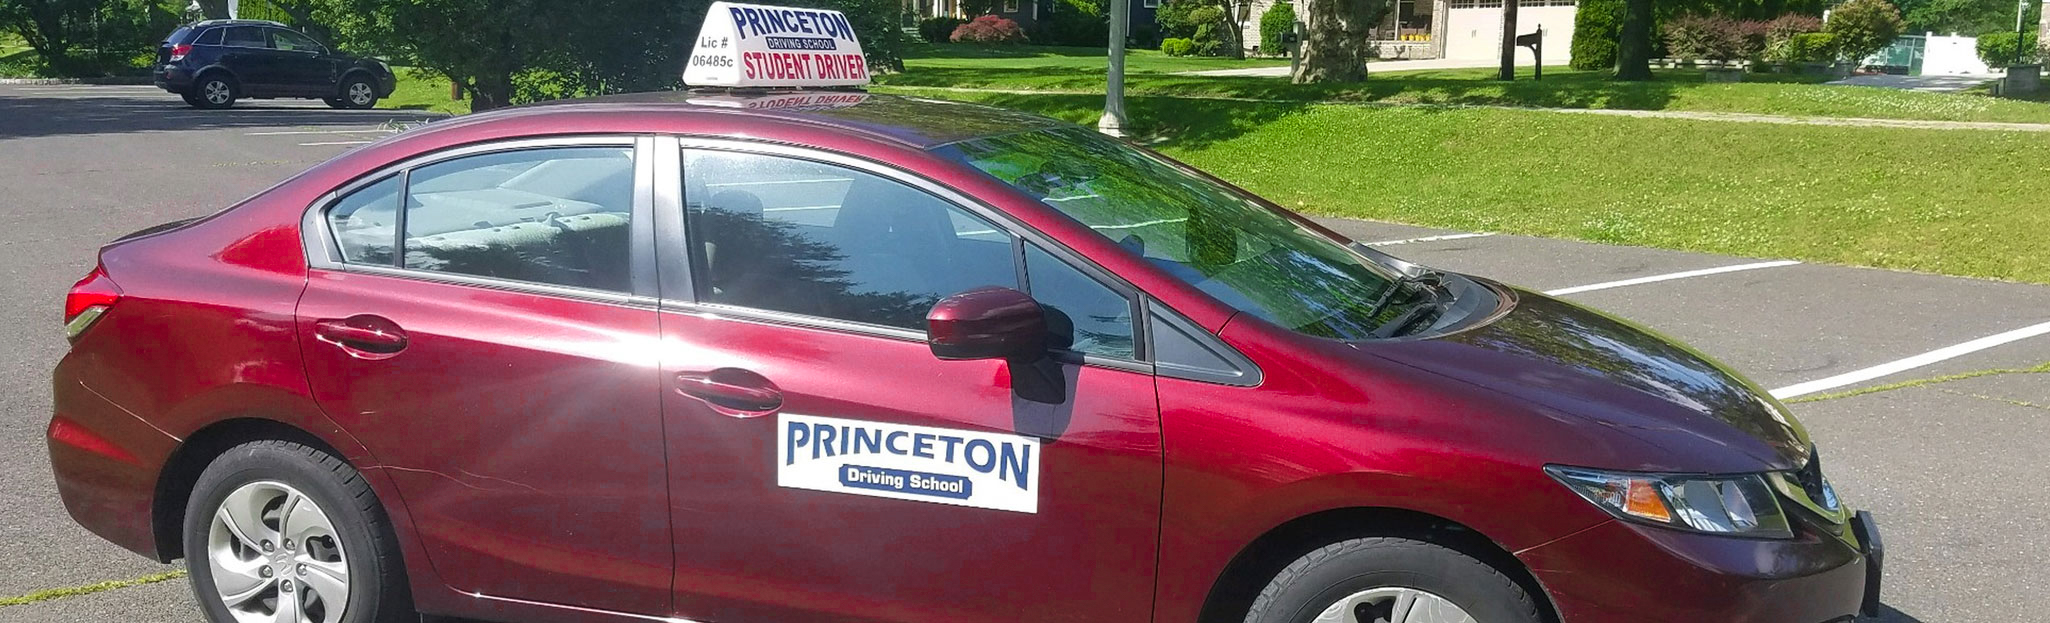 Princeton Driving School Safety